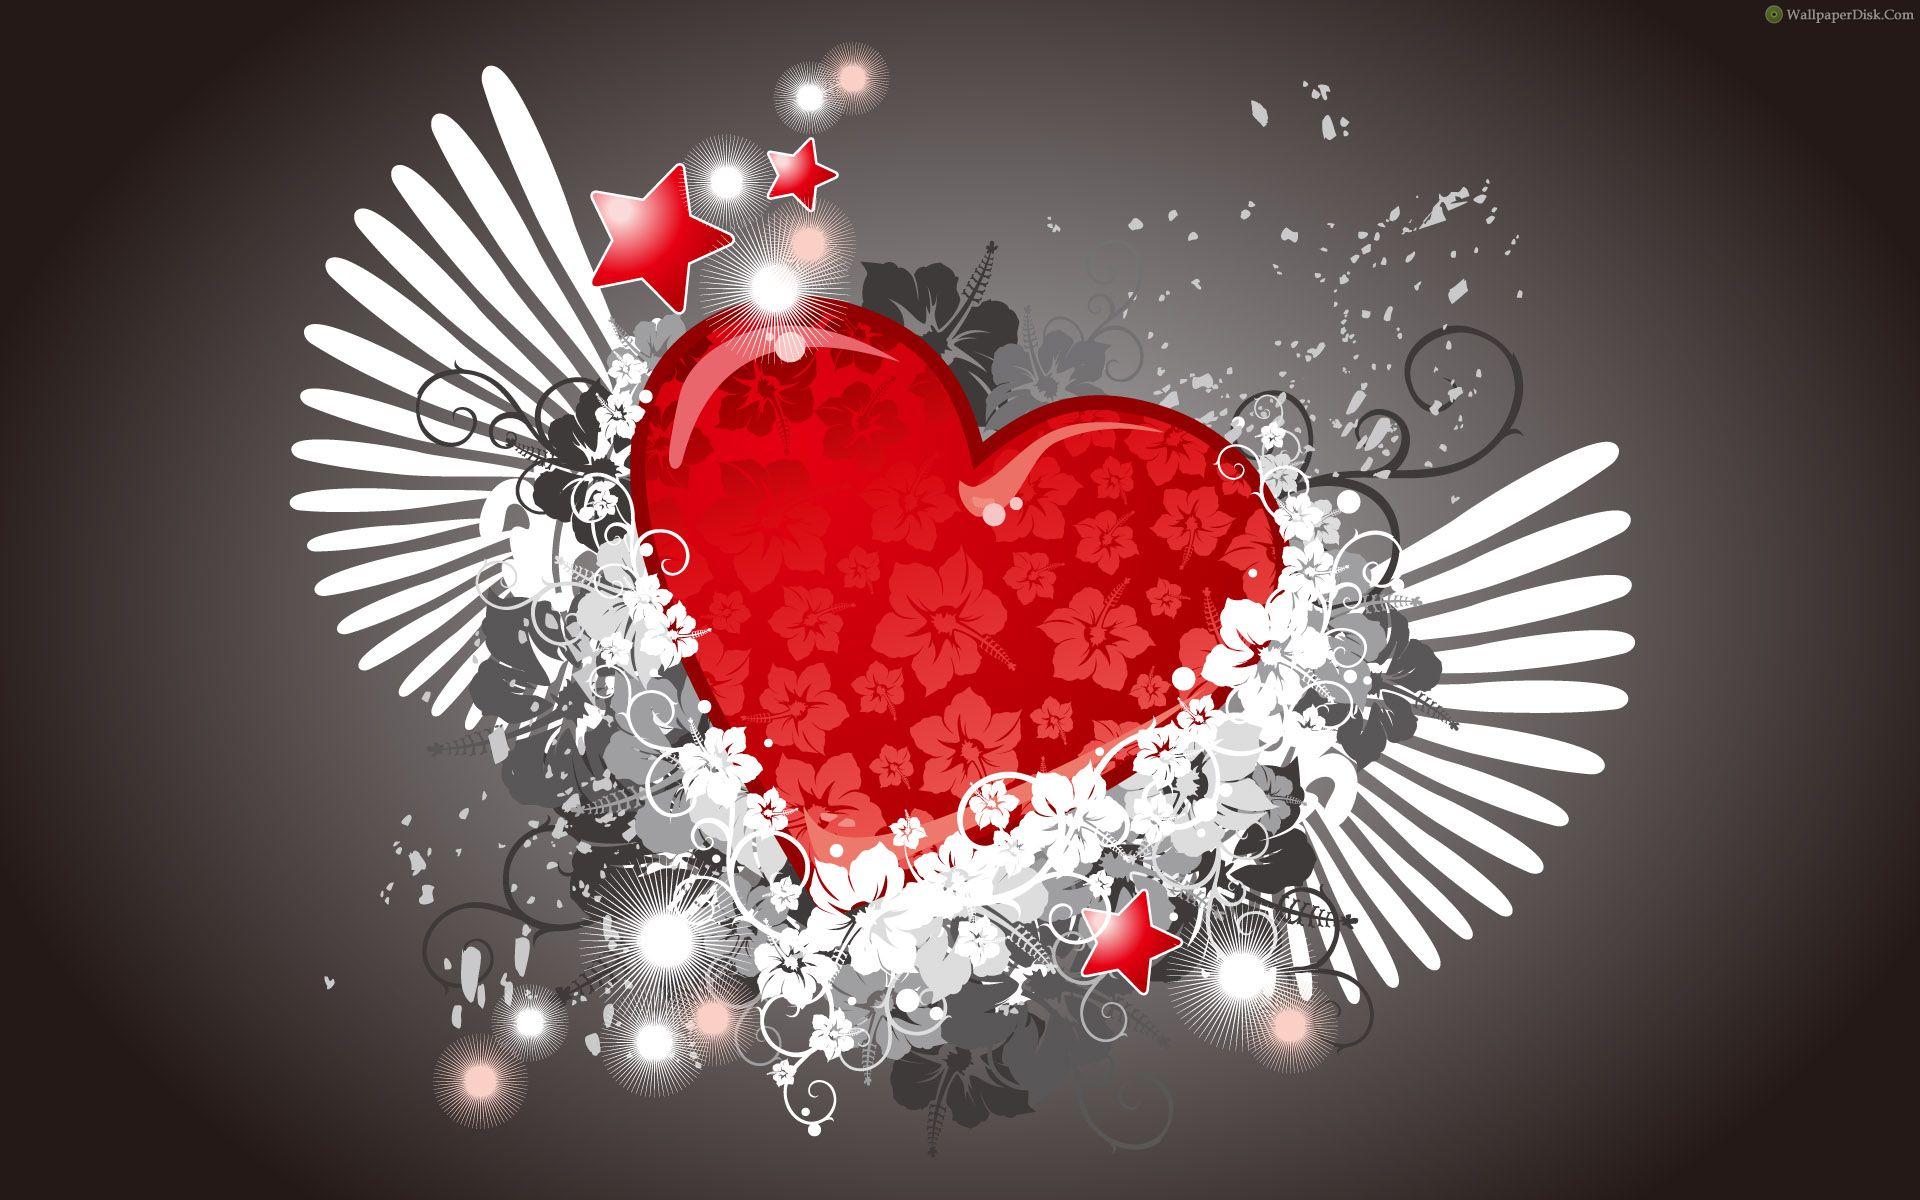 Free download Cool Heart Wallpaper Image amp Picture Becuo [1920x1200] for your Desktop, Mobile & Tablet. Explore Cool Heart Wallpaper. Wallpaper Of Love Heart, Hearts Wallpaper Background, Heart Wallpaper For Desktop